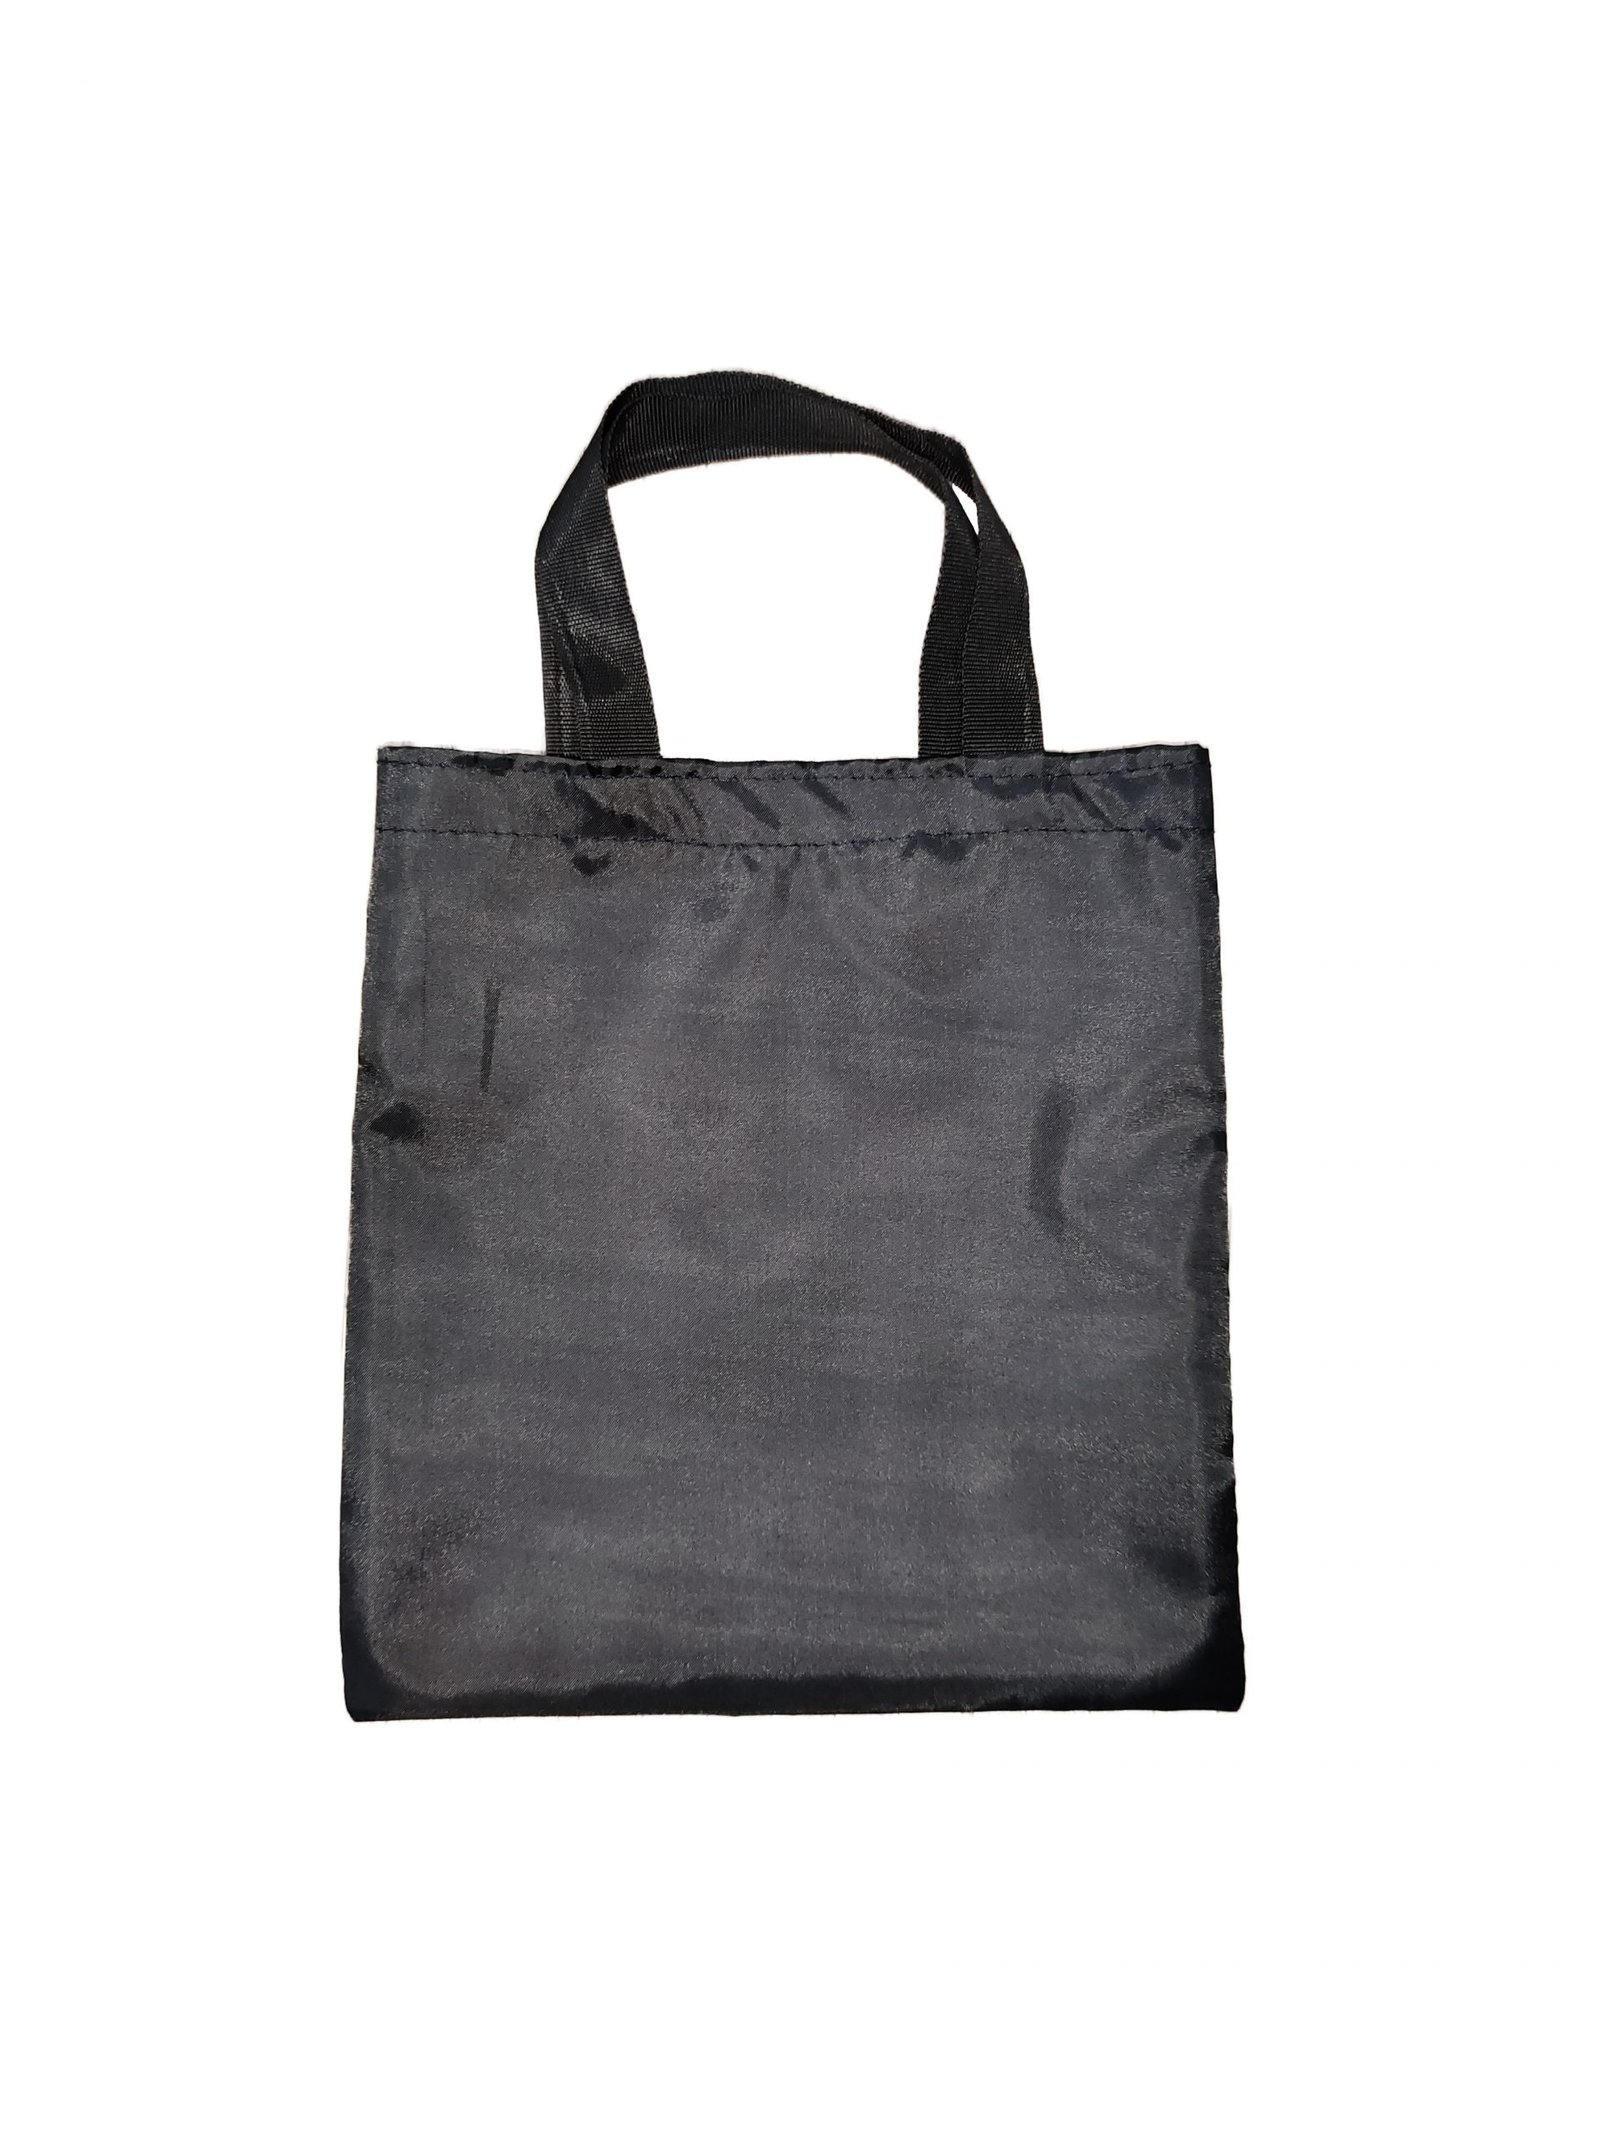 Rucksack Bag - Black Rucksack Bagpack - Unisex | Rimagined